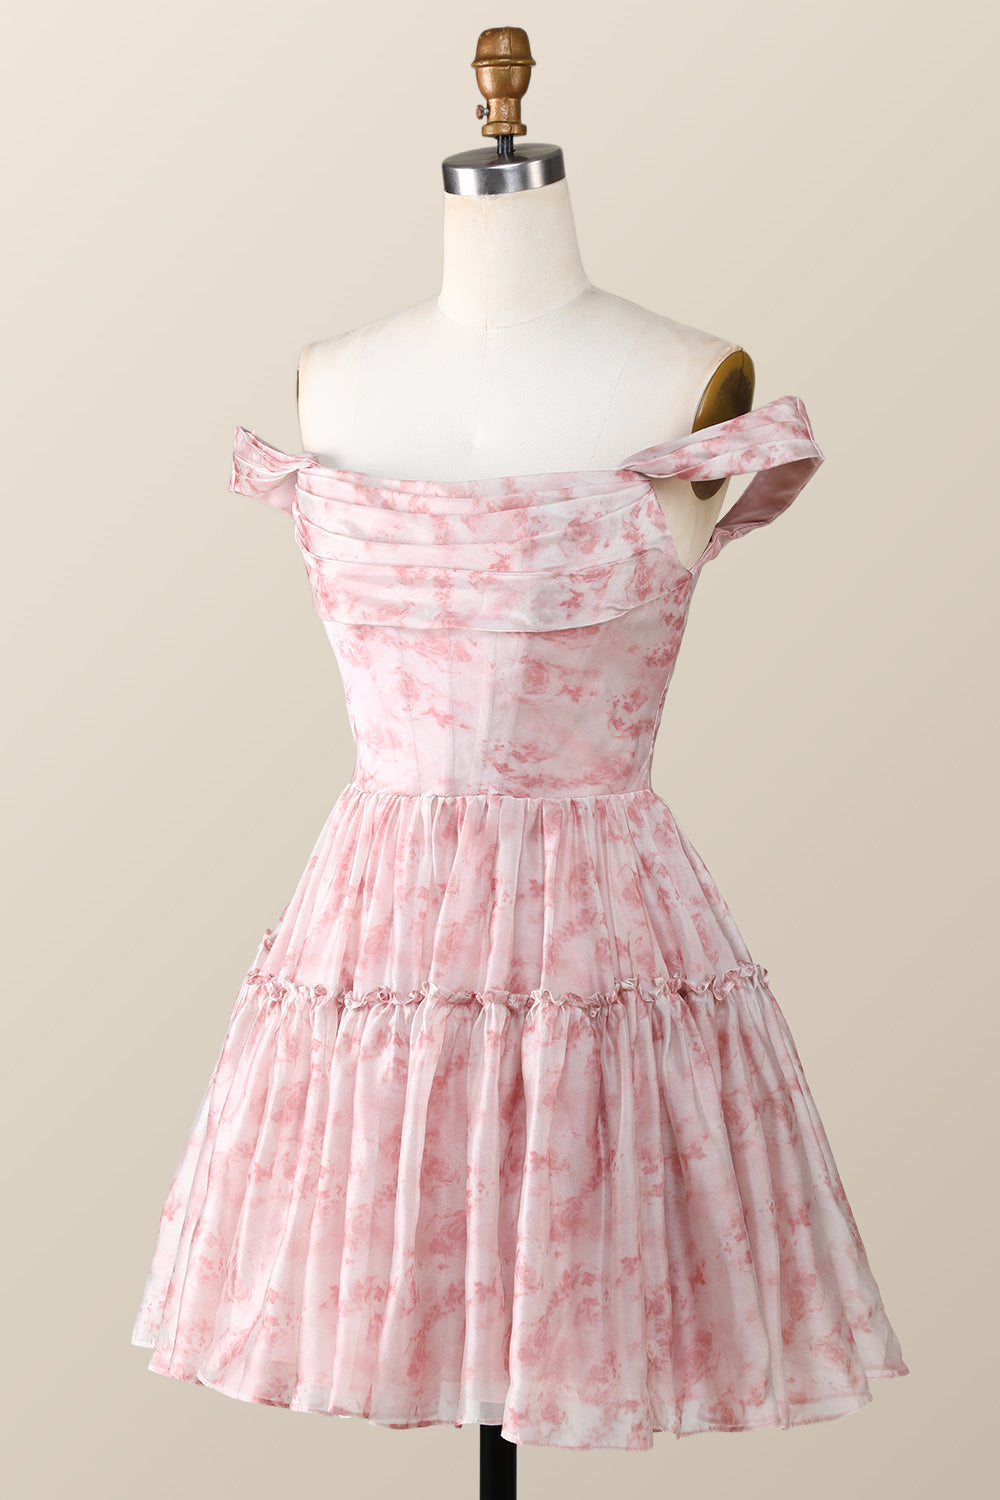 Cowl Neck Pink Print Short Homecoming Dress